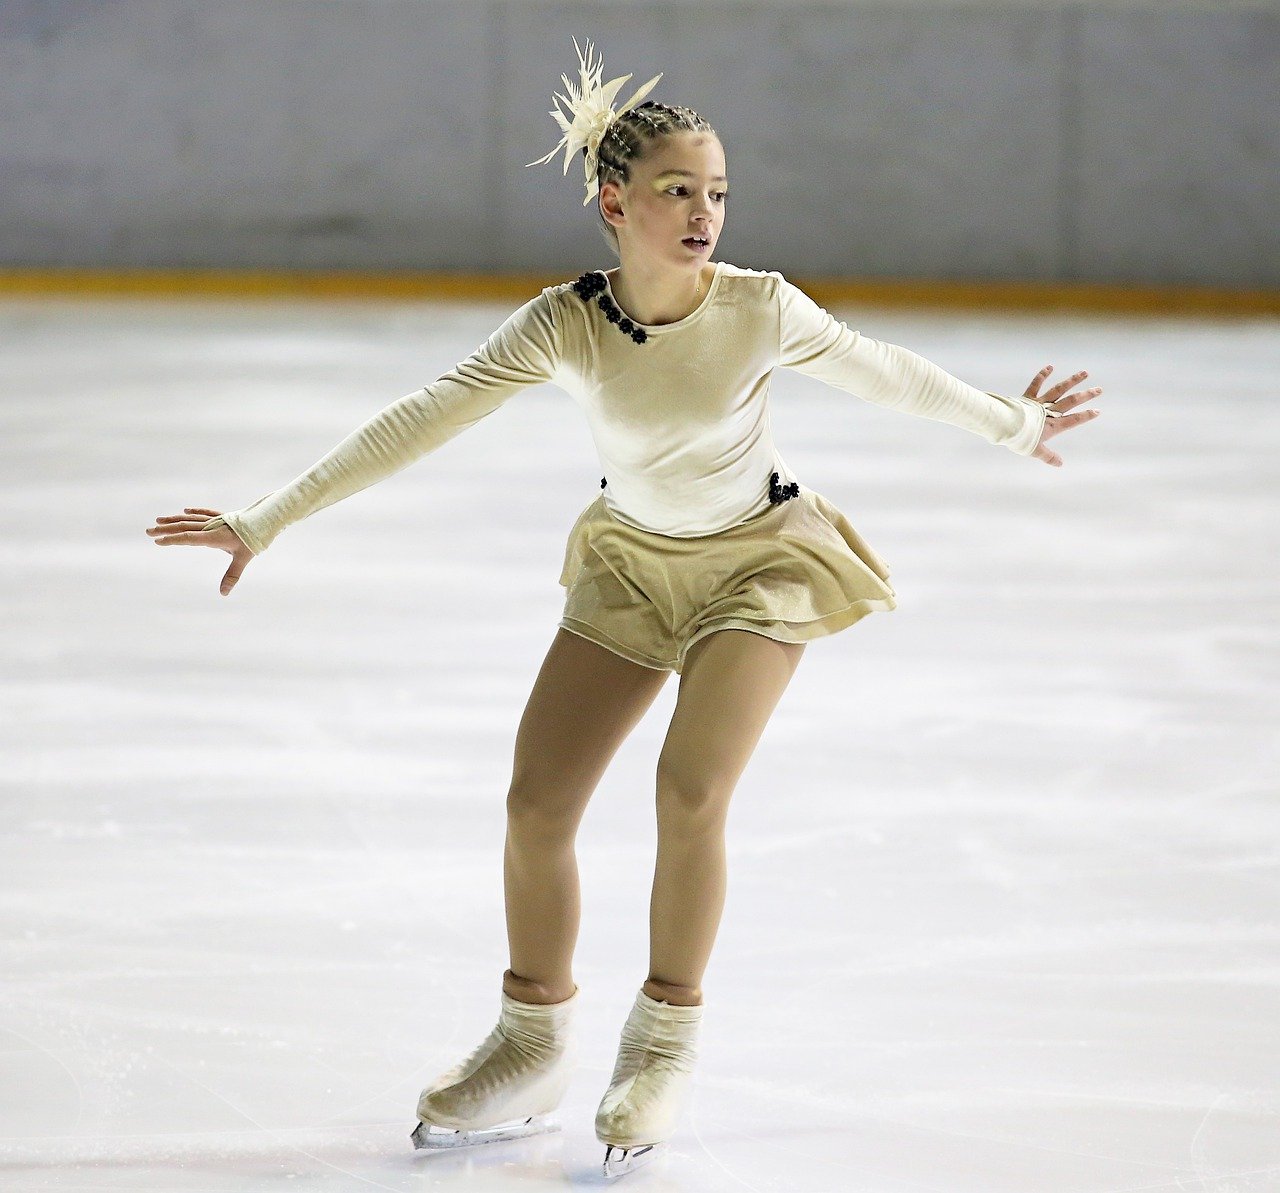 Vivian's dream was to become a figure skater. | Source: Pixabay